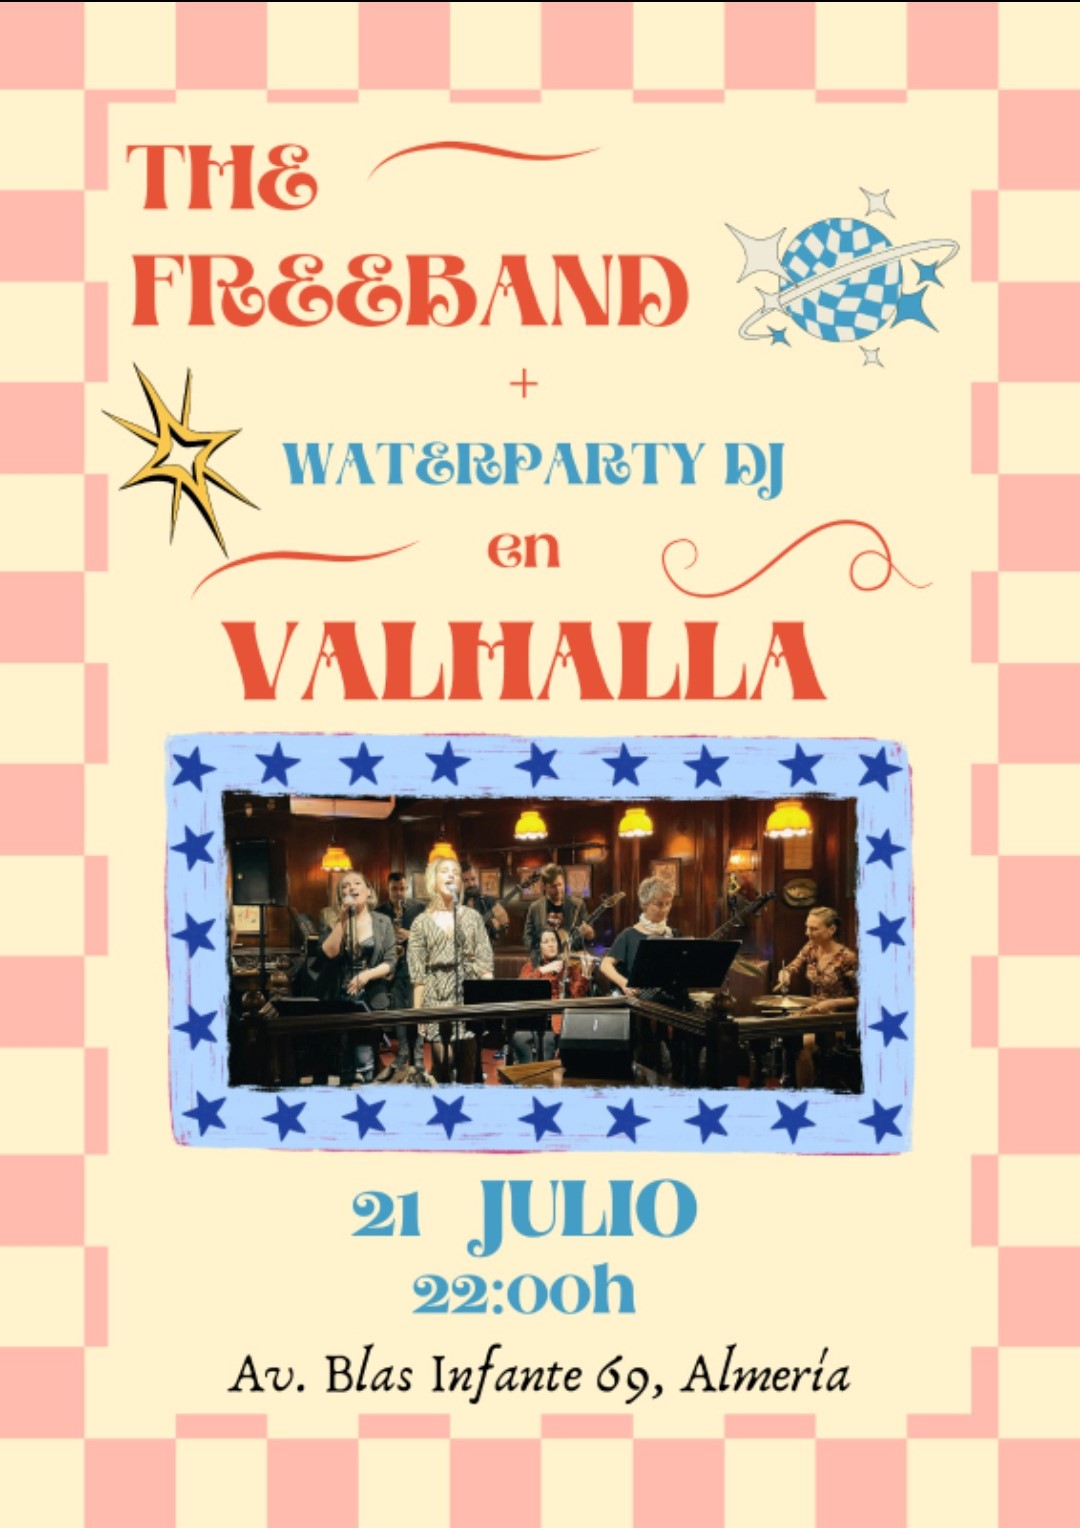 The Freeband + Waterparty DJ en Valhalla